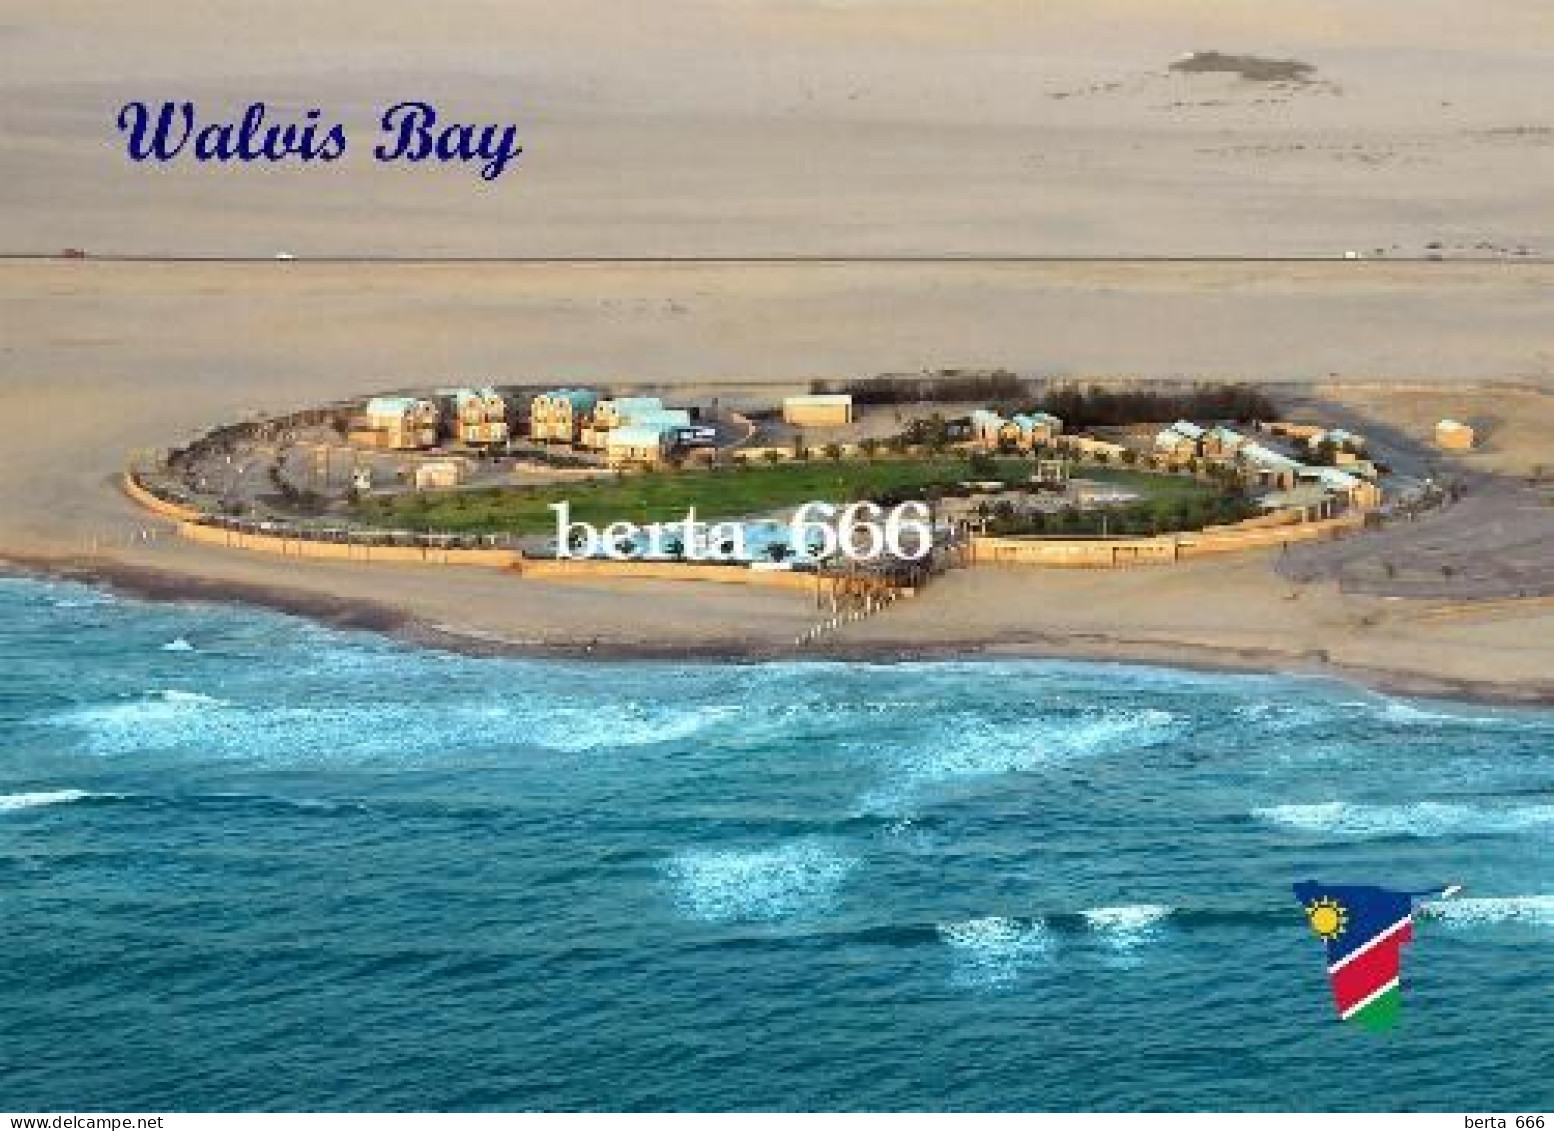 Namibia Walvis Bay New Postcard - Namibie